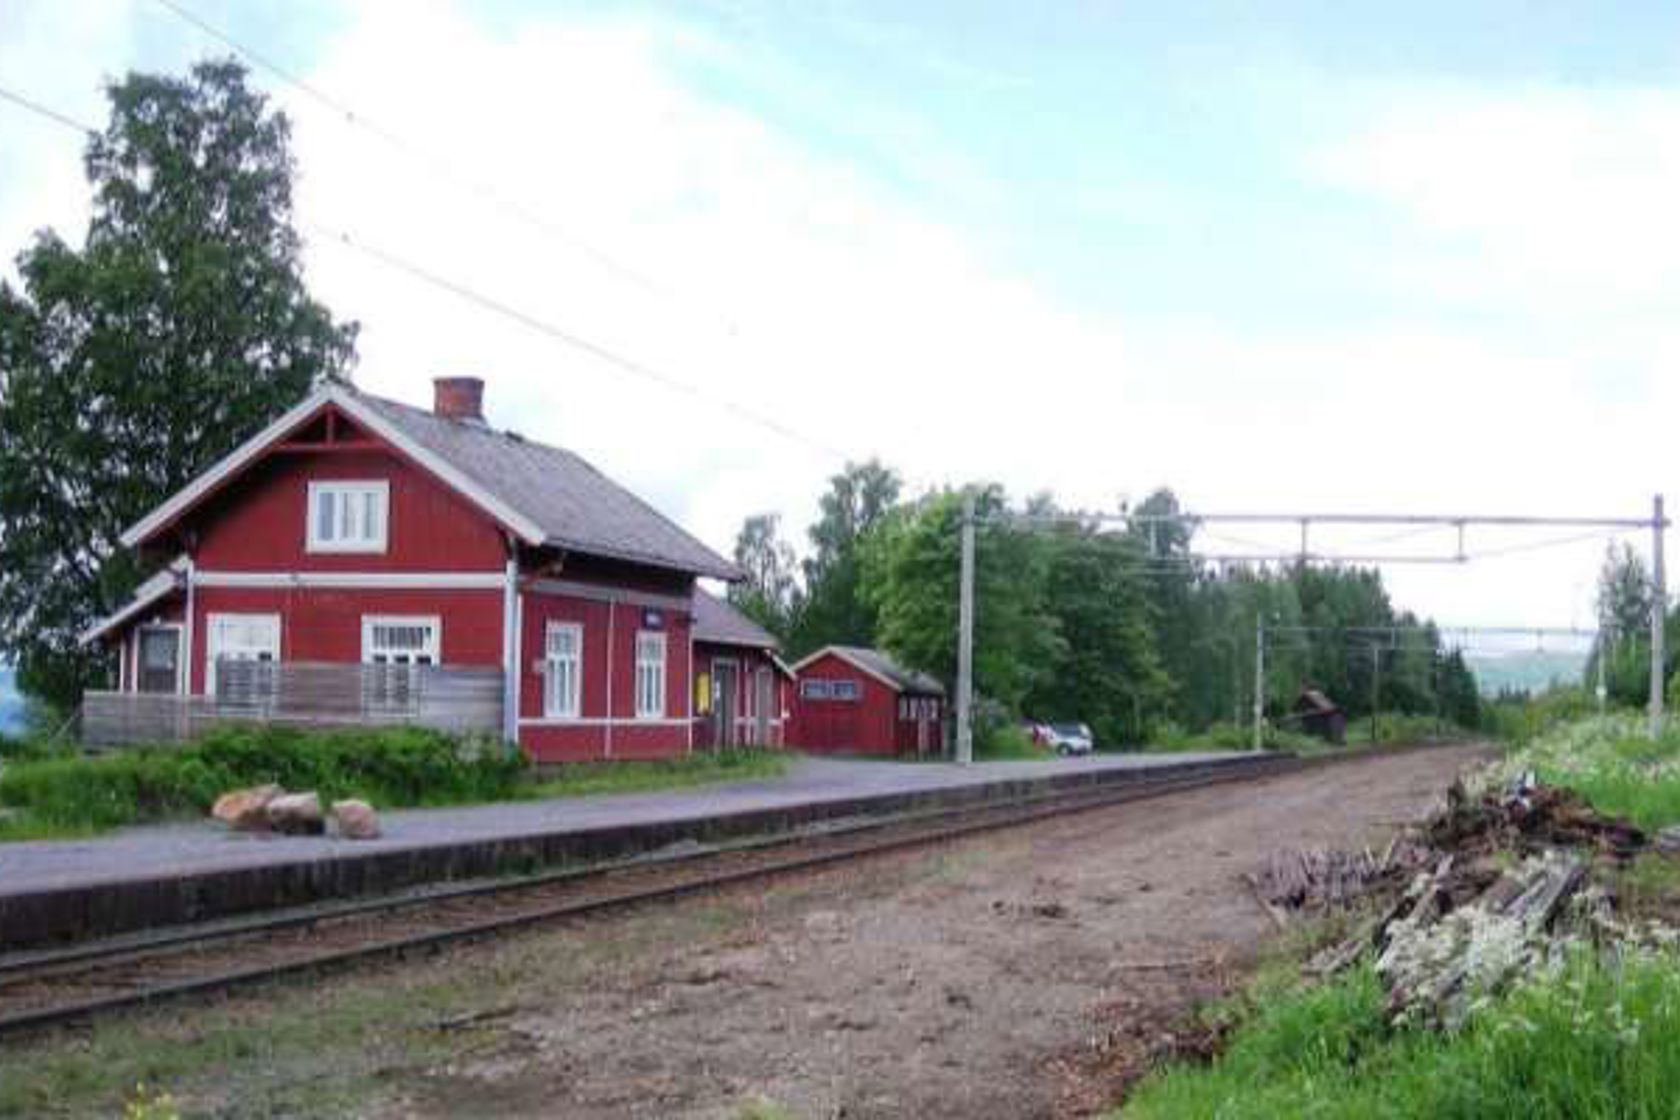 Exterior view of Bleiken station